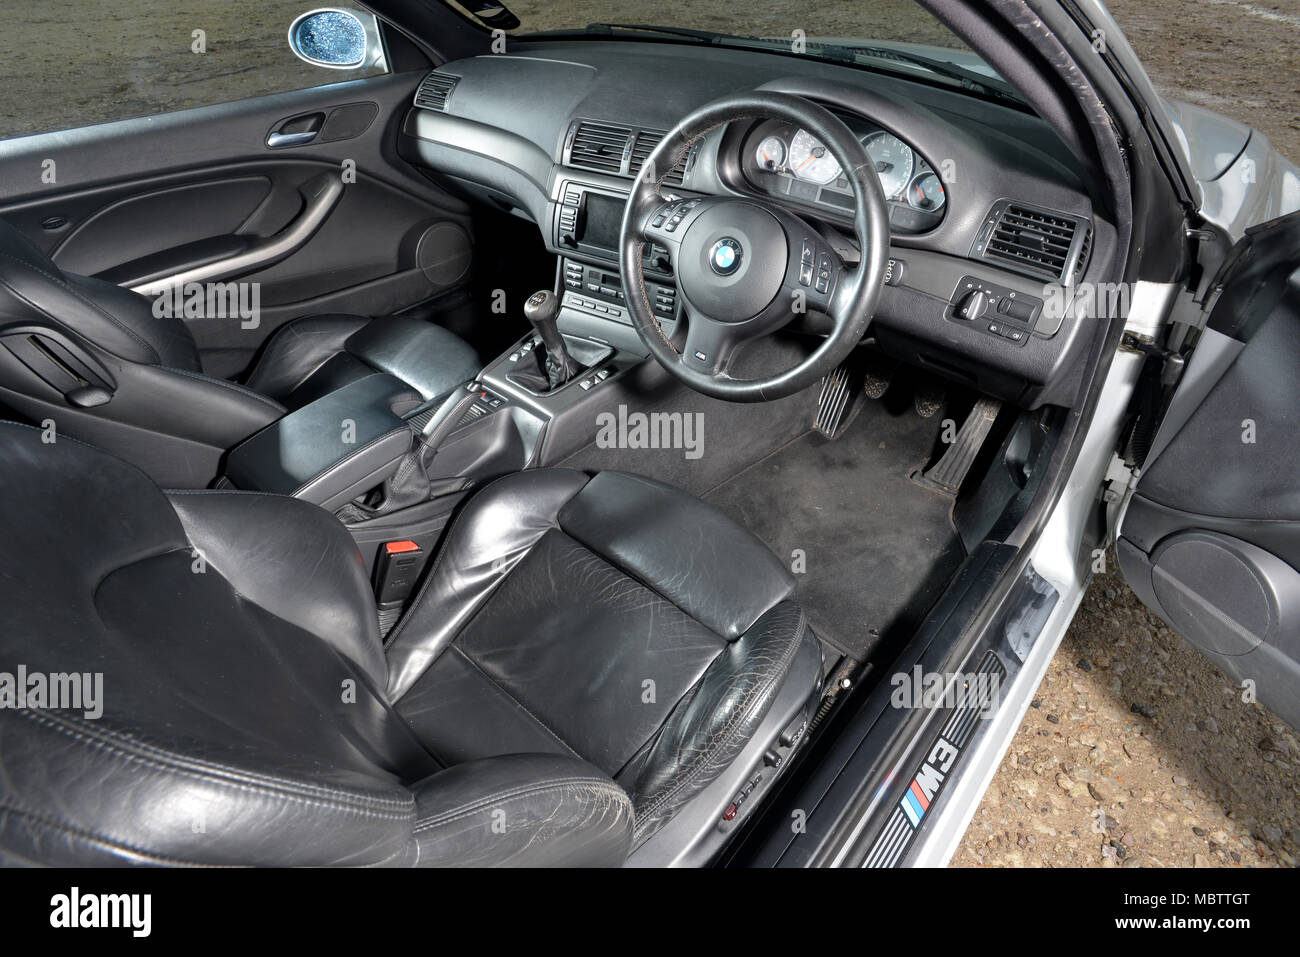 2003 E46 shape BMW M3 coupe German sports car Stock Photo - Alamy